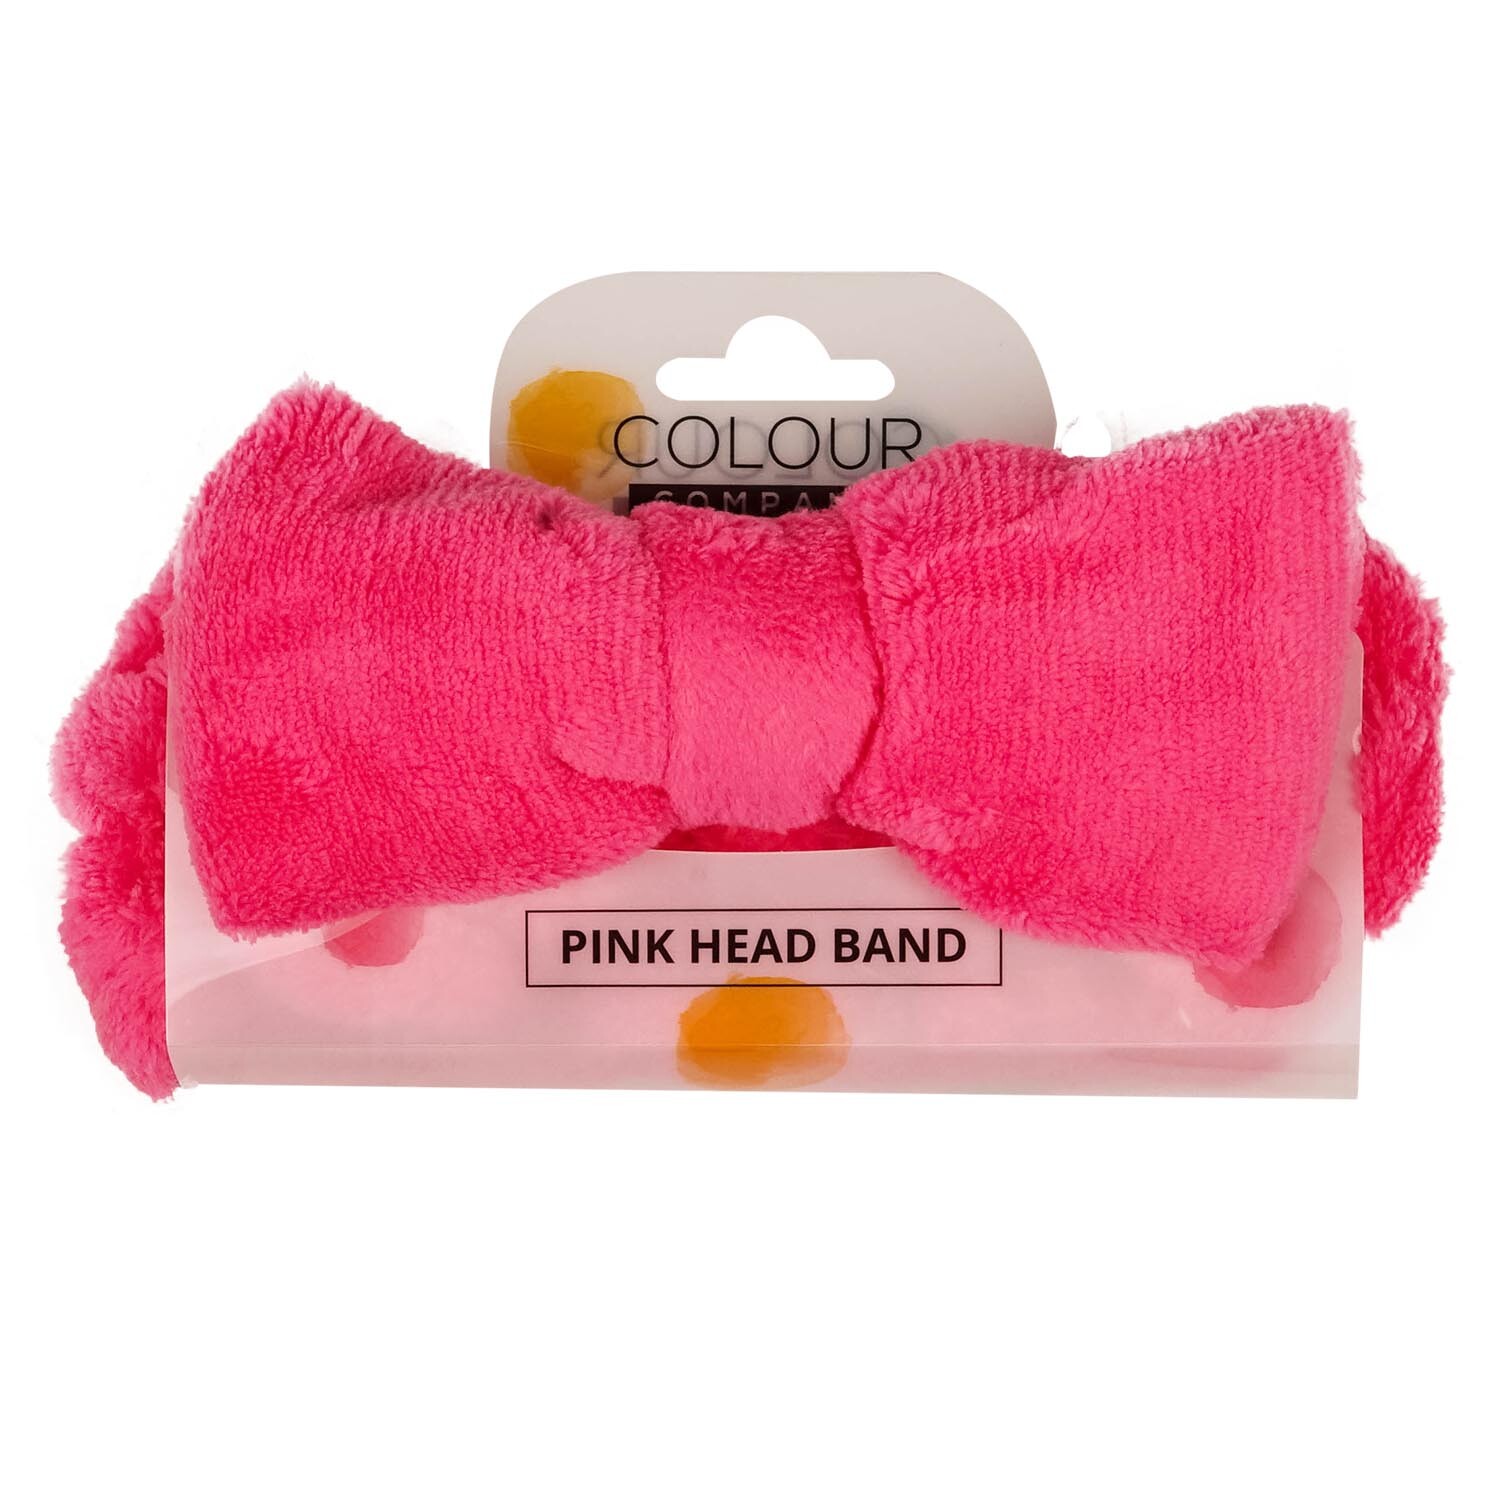 Colour Company Pink Head Band Image